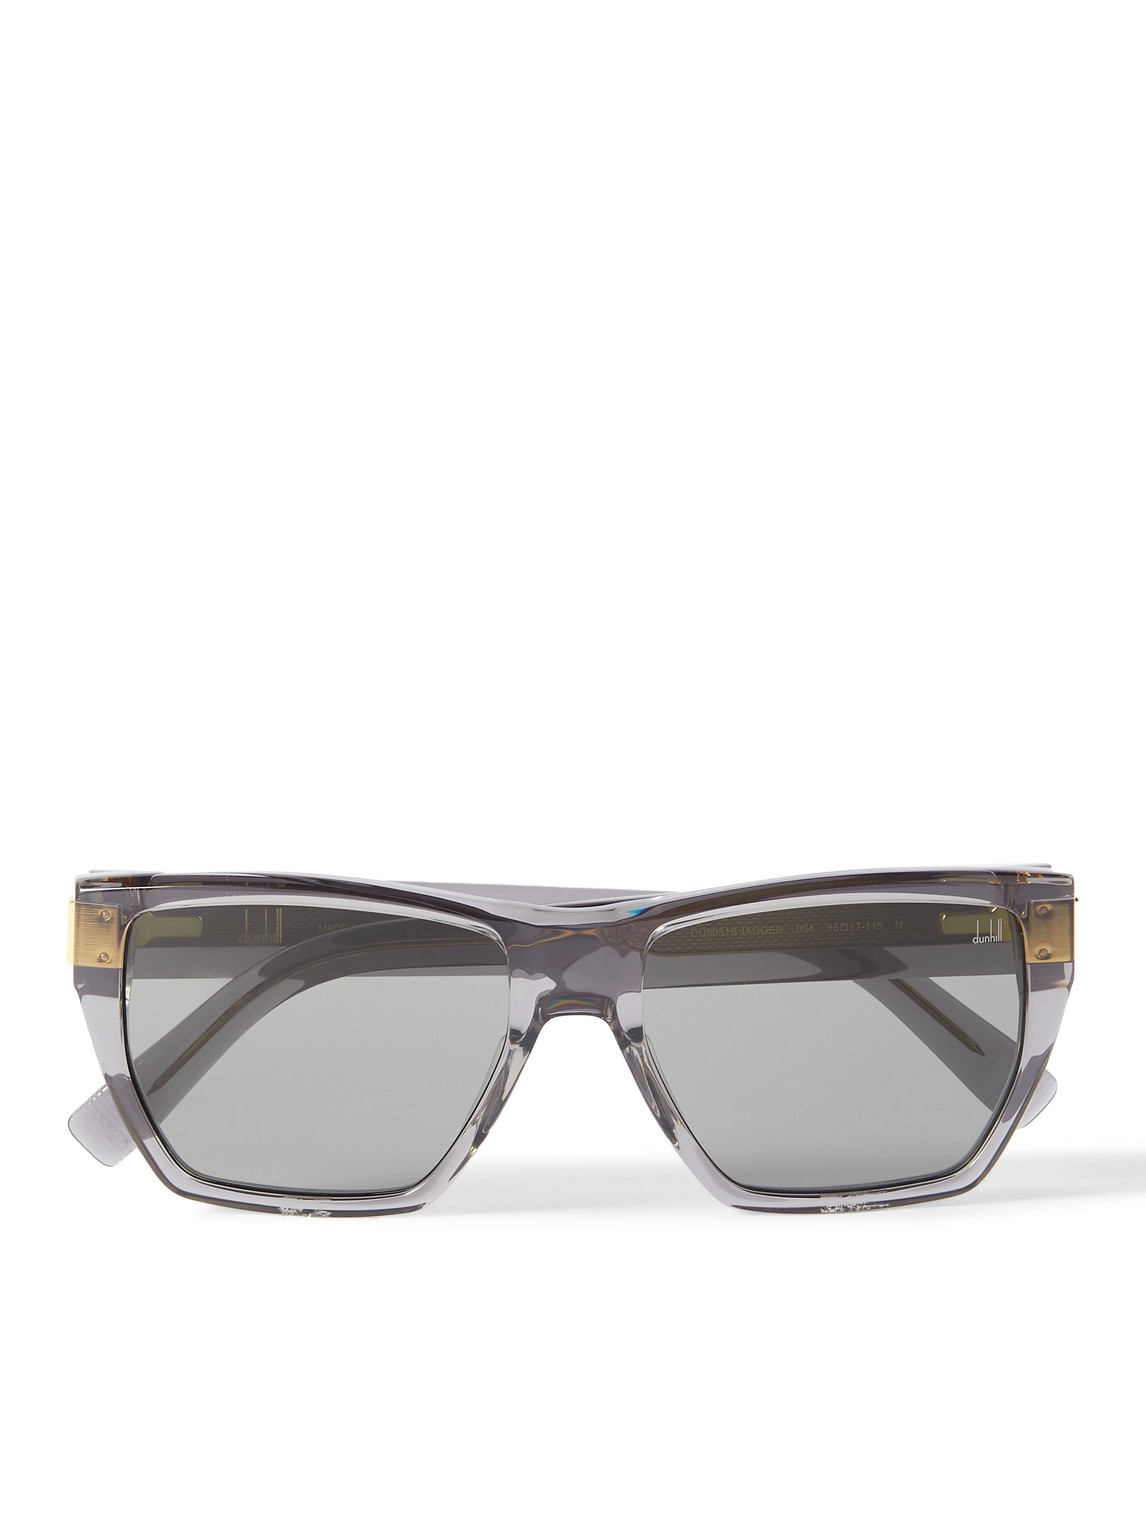 Dunhill - D-Frame Acetate Sunglasses - Men - Gray von Dunhill